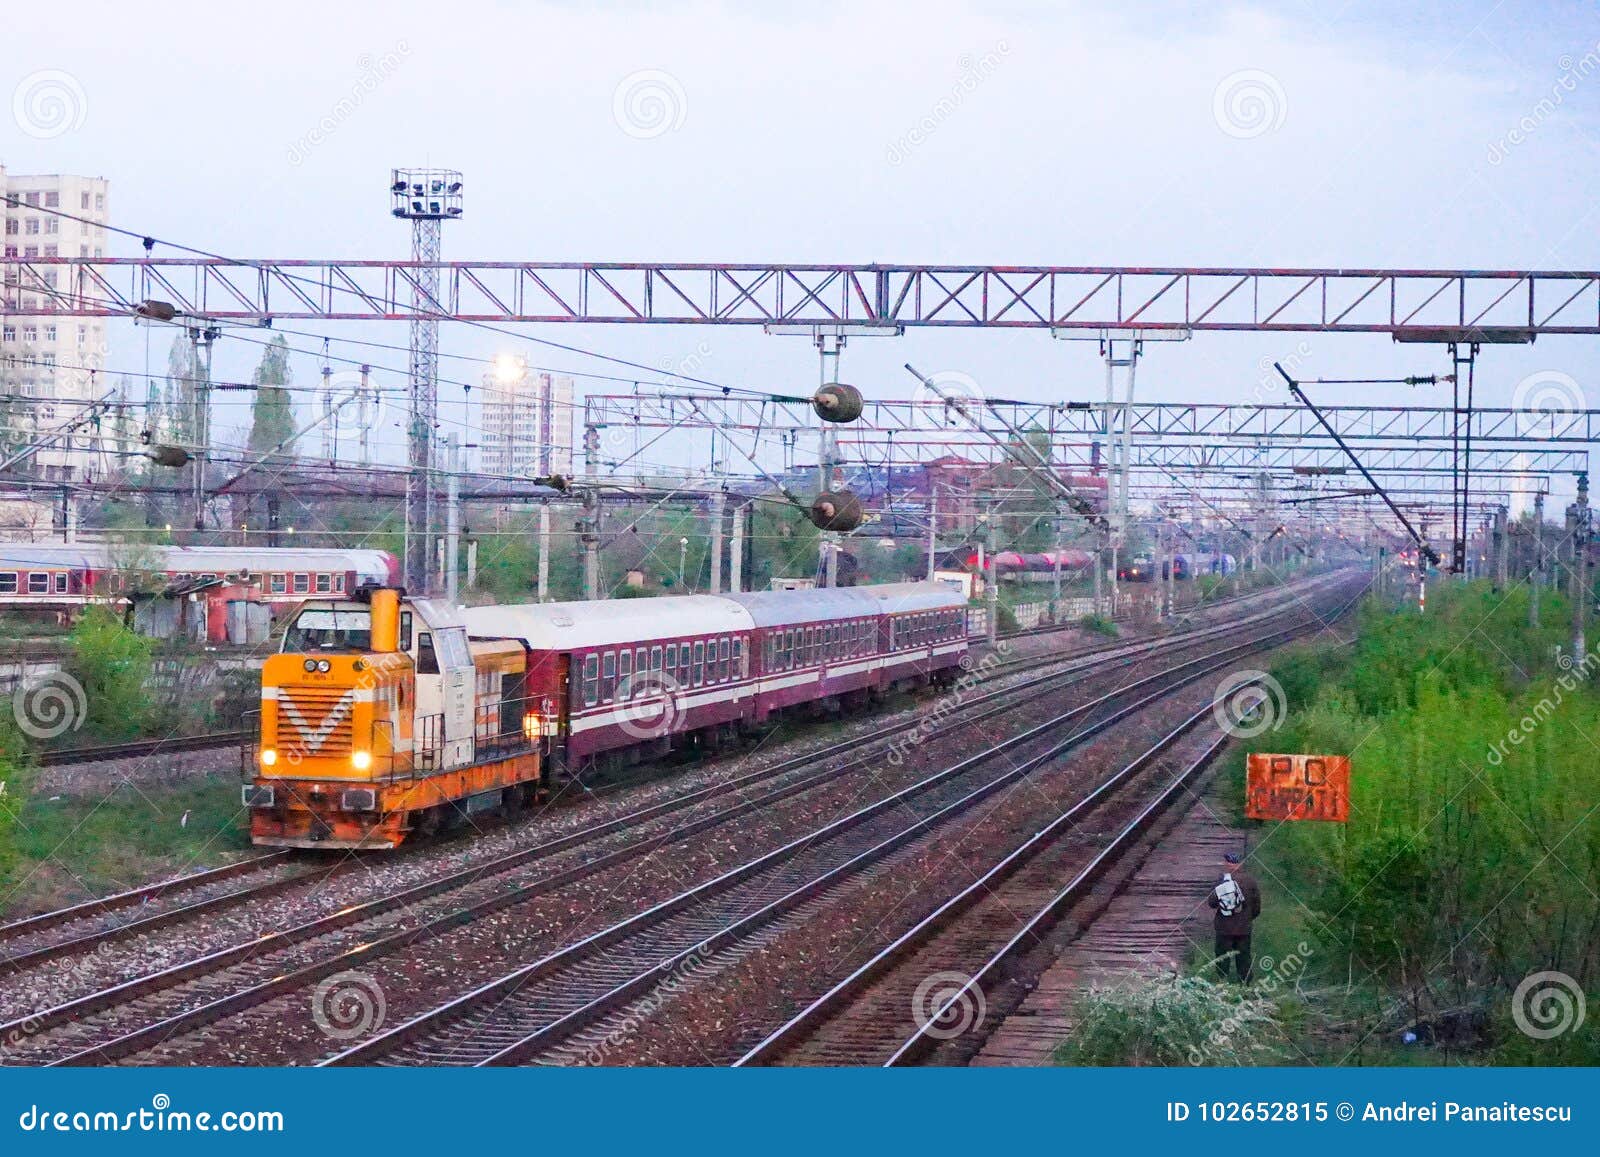 scene of orange locomotive and red train in carpati station, bucharest, cfr